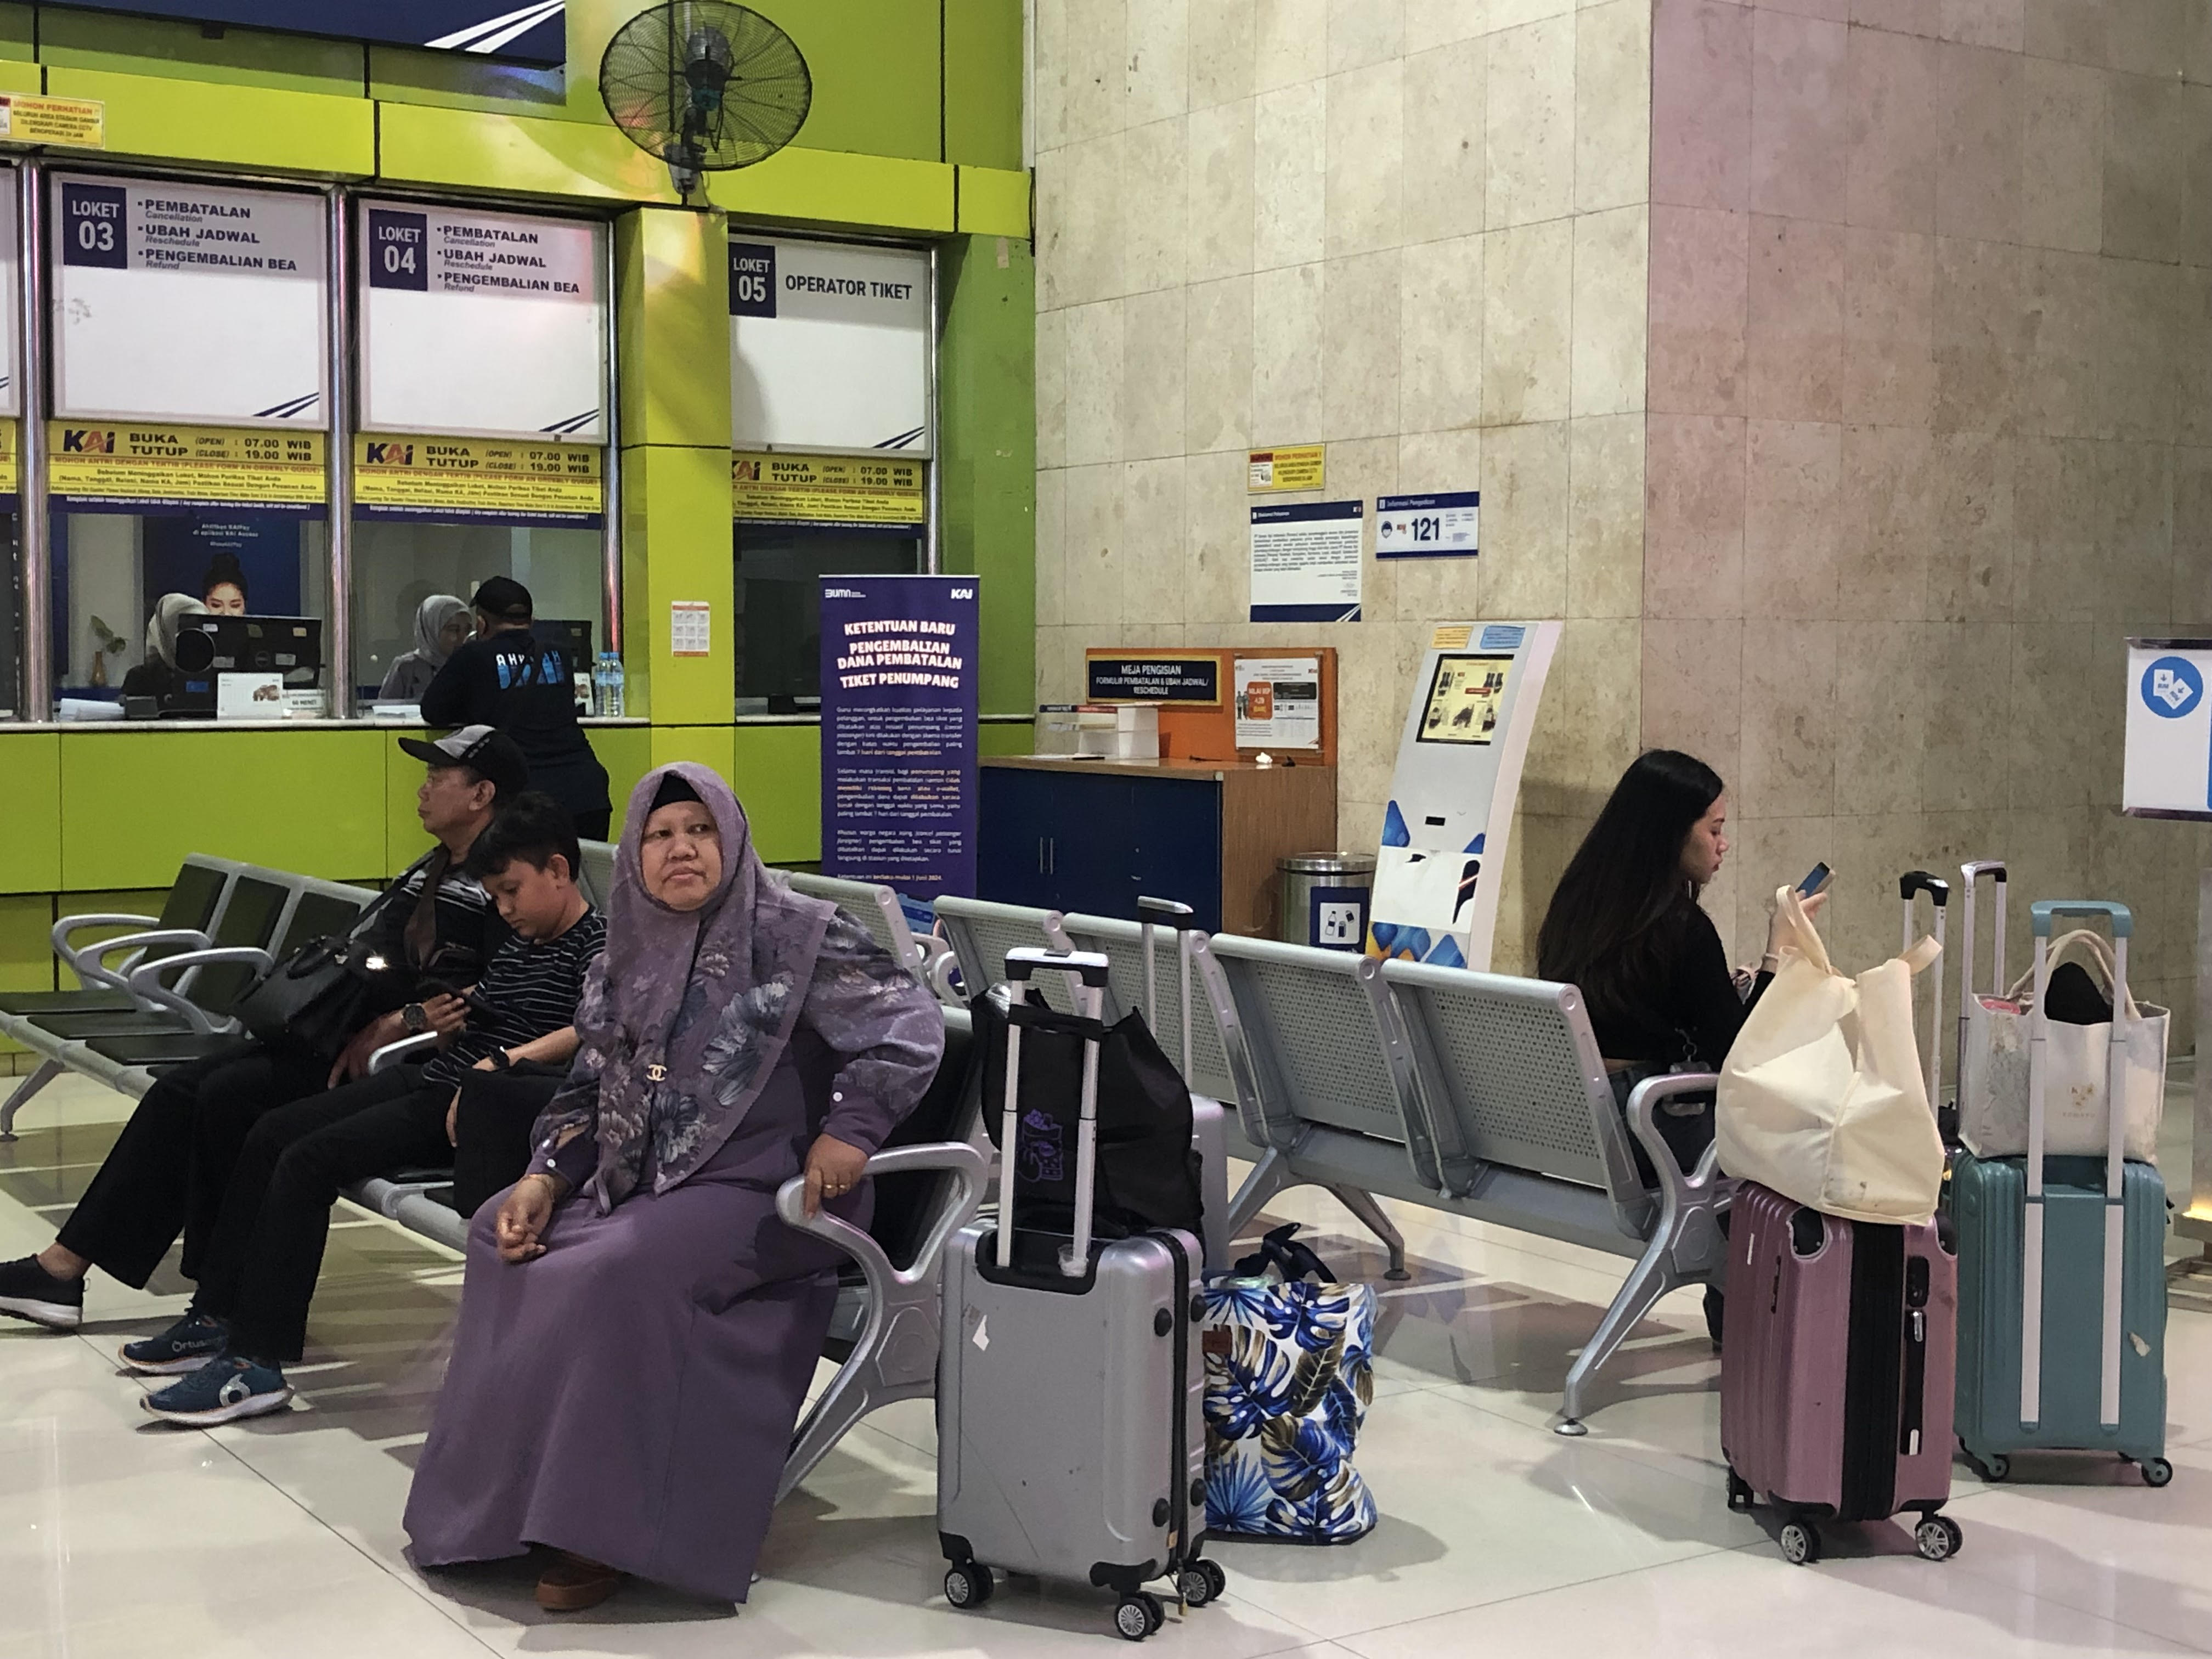 7 Ribu Orang Meninggalkan Jakarta Melalui Stasiun Gambir Hari Ini